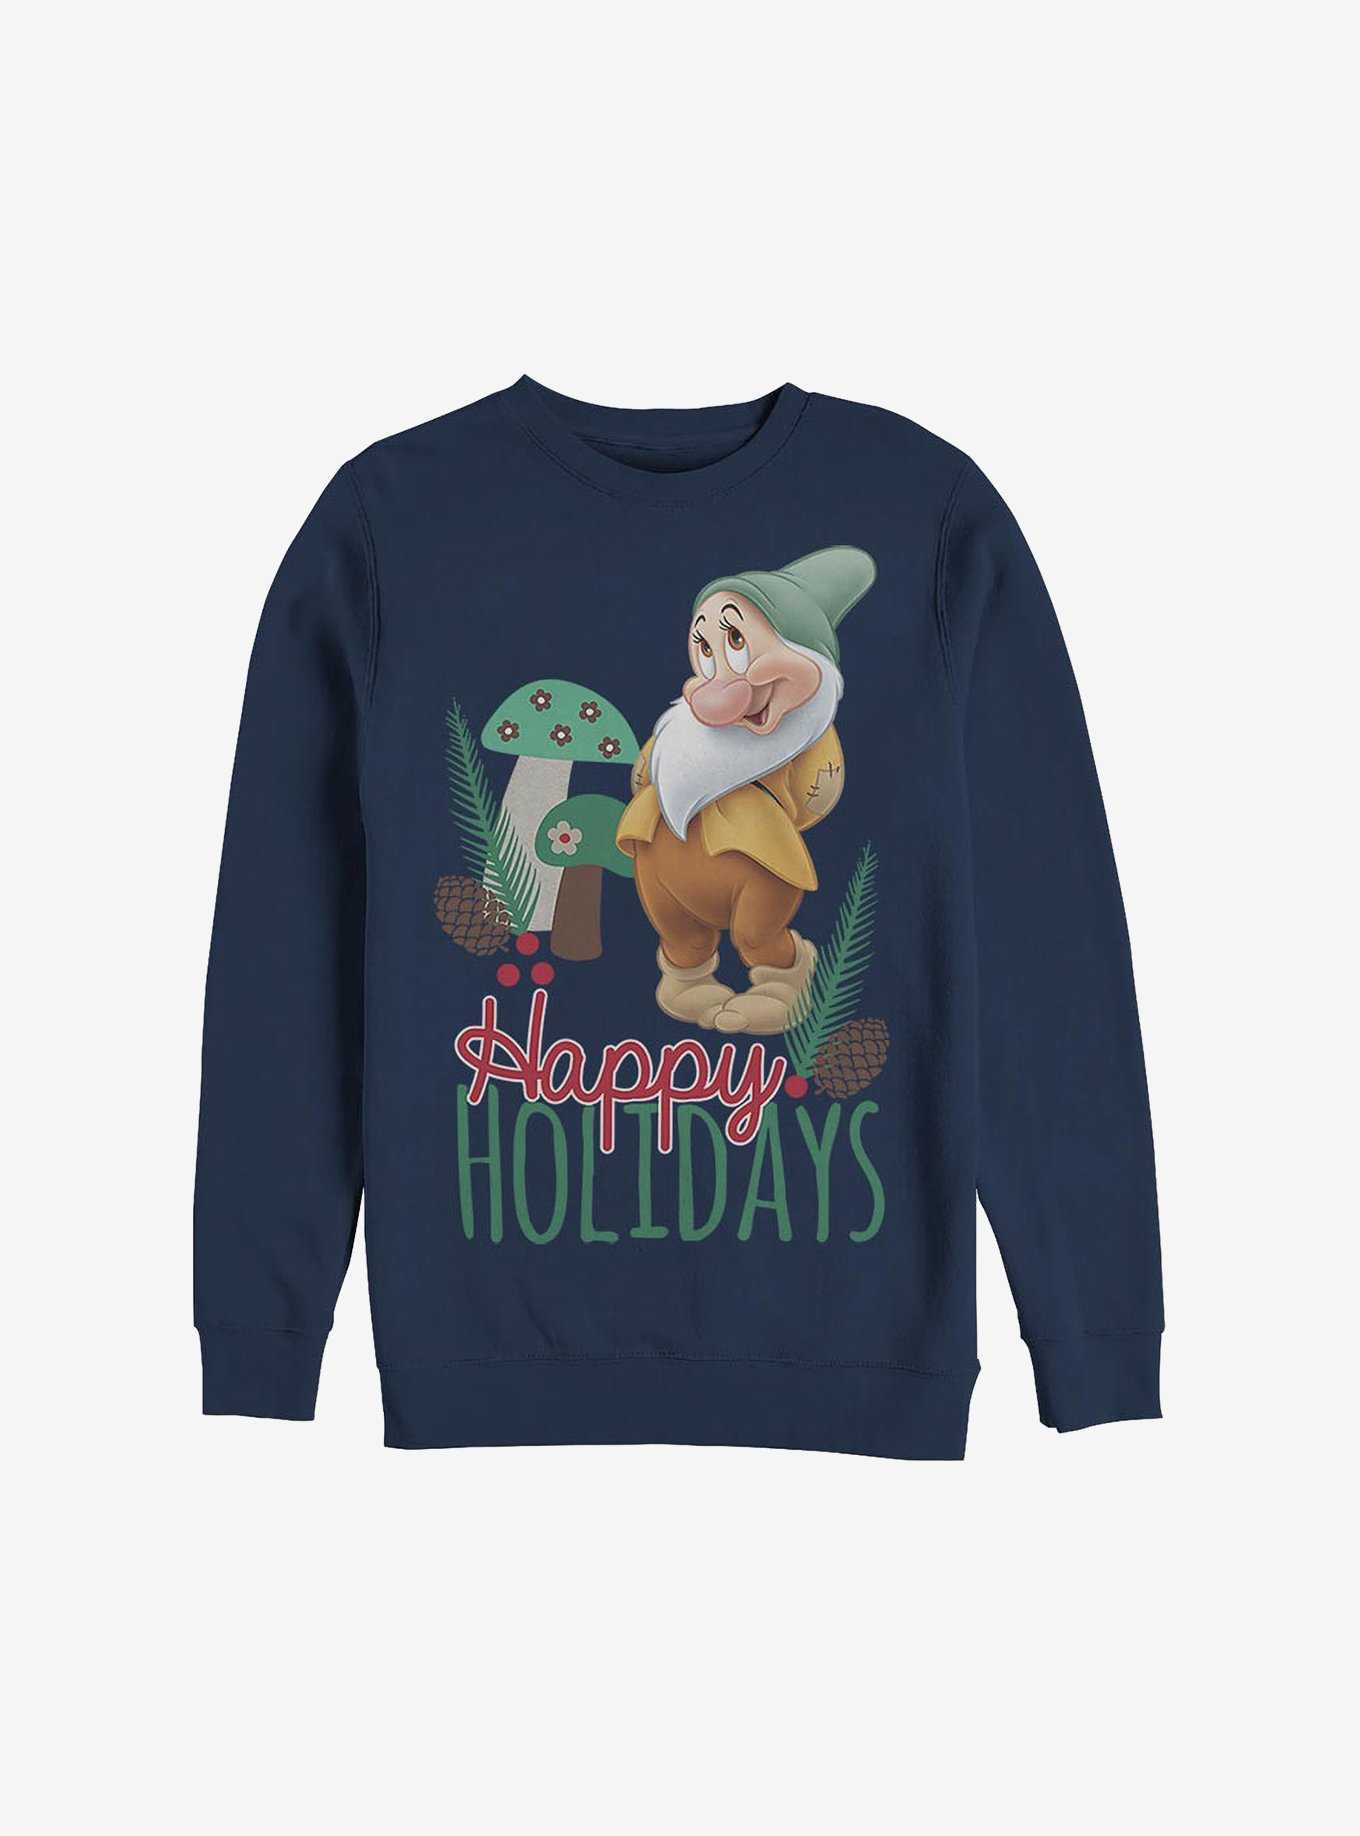 Disney Snow White Bashful Christmas Sweatshirt, , hi-res